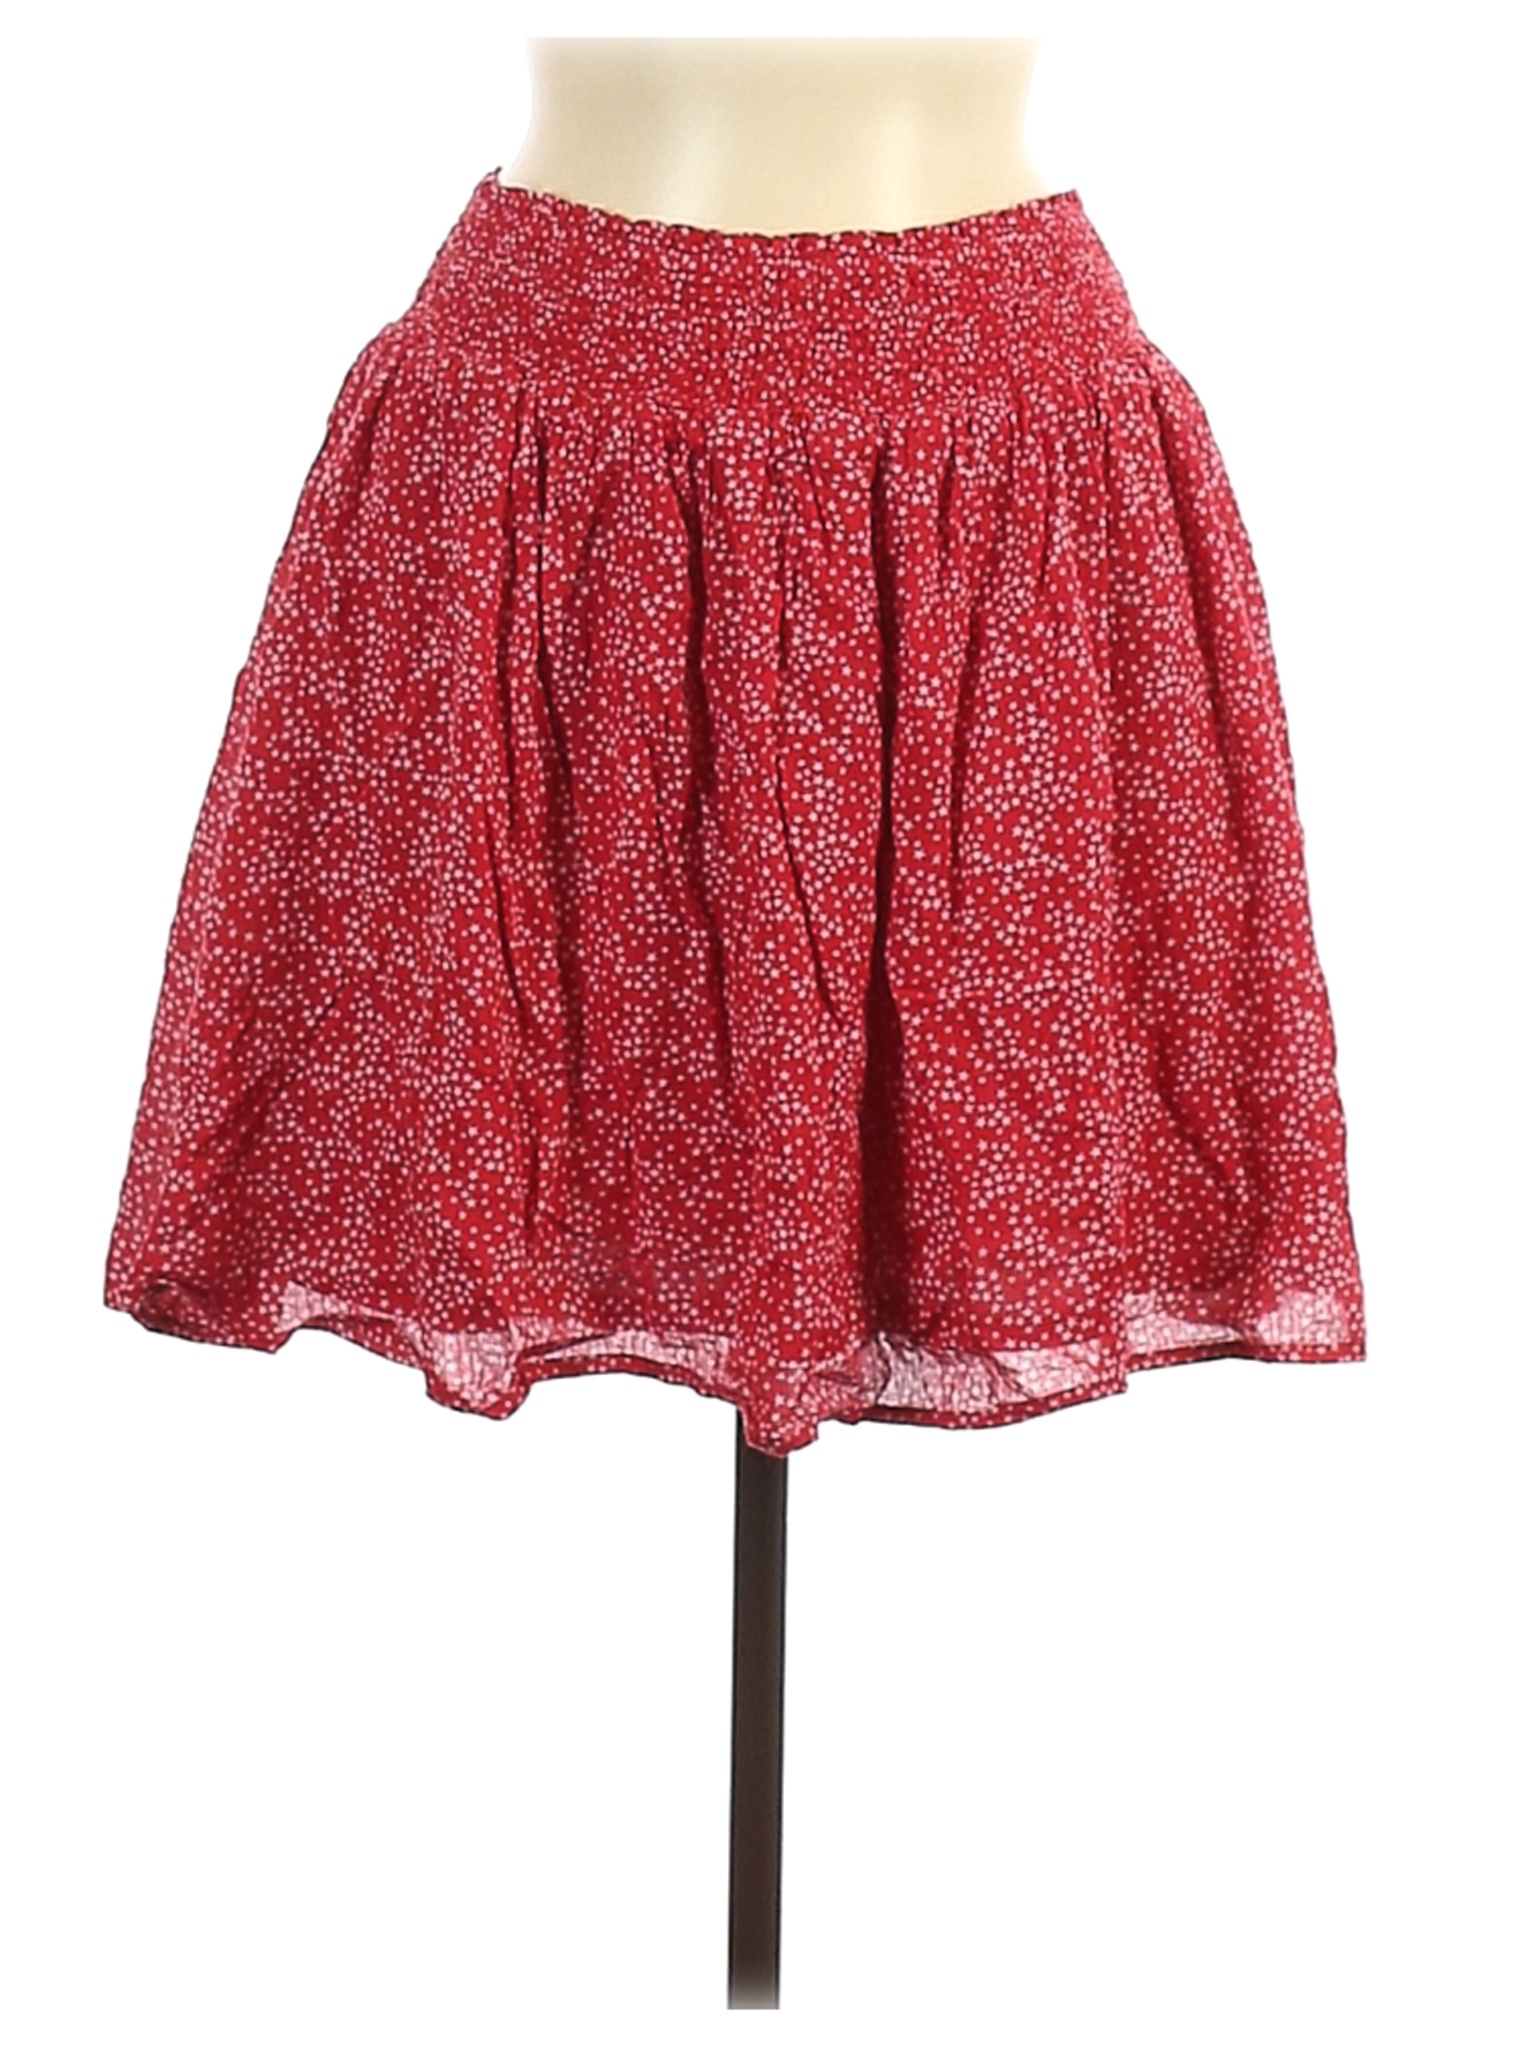 Old Navy Women Red Casual Skirt M | eBay